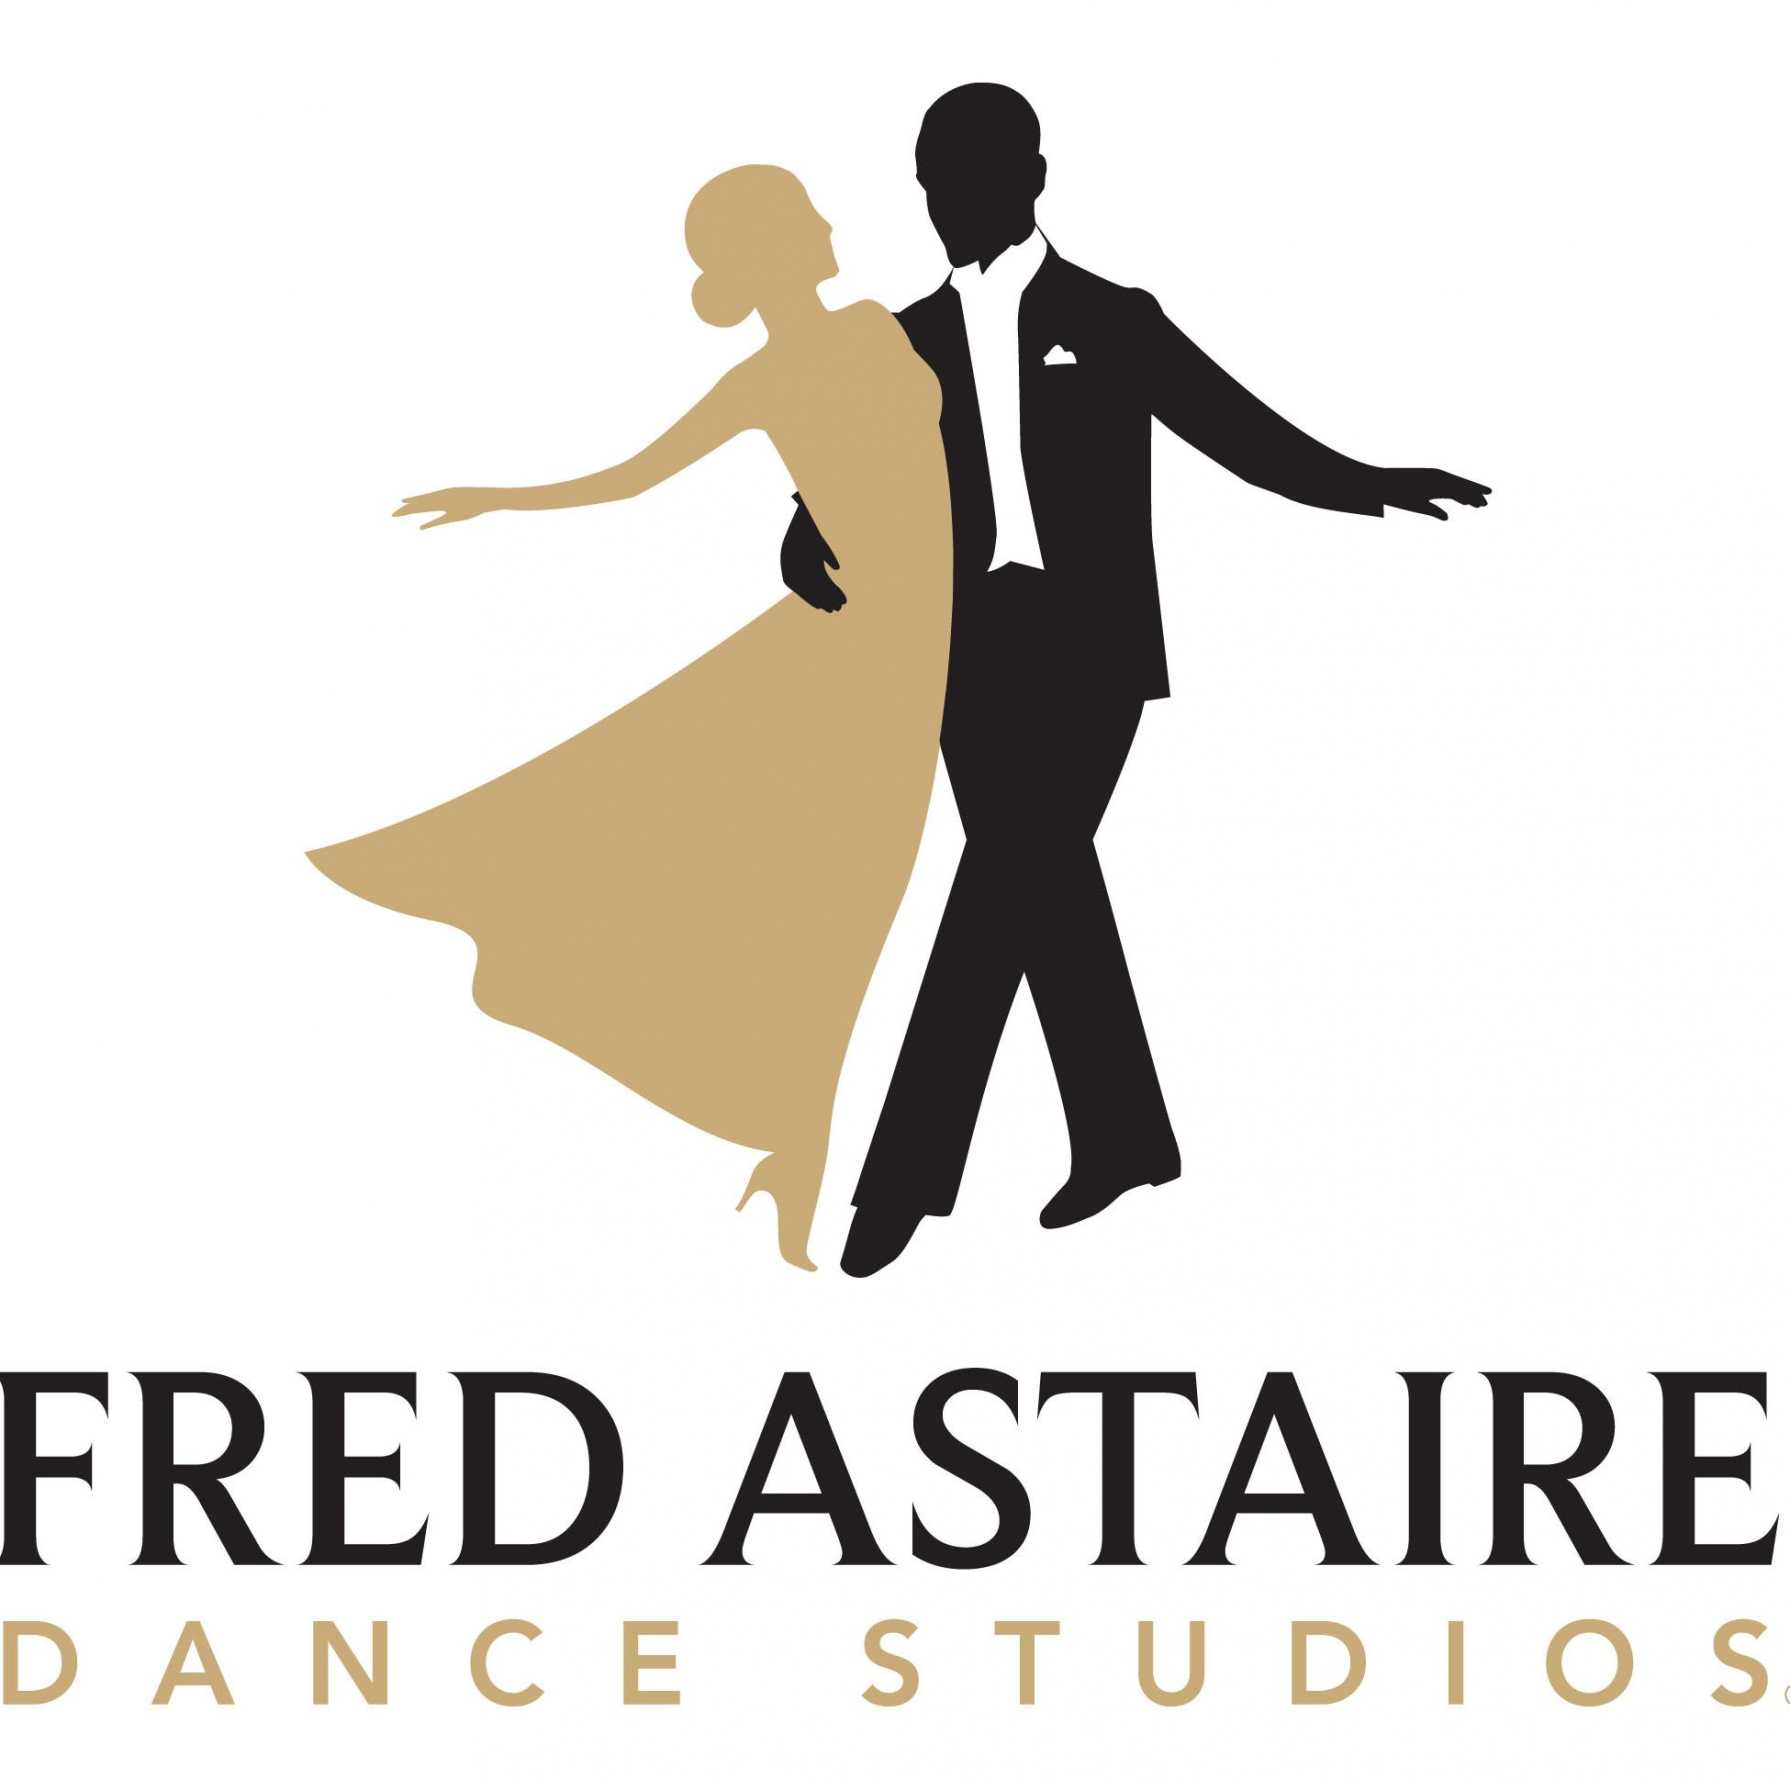 Fred Astaire Dance Studios - East Greenwich Logo